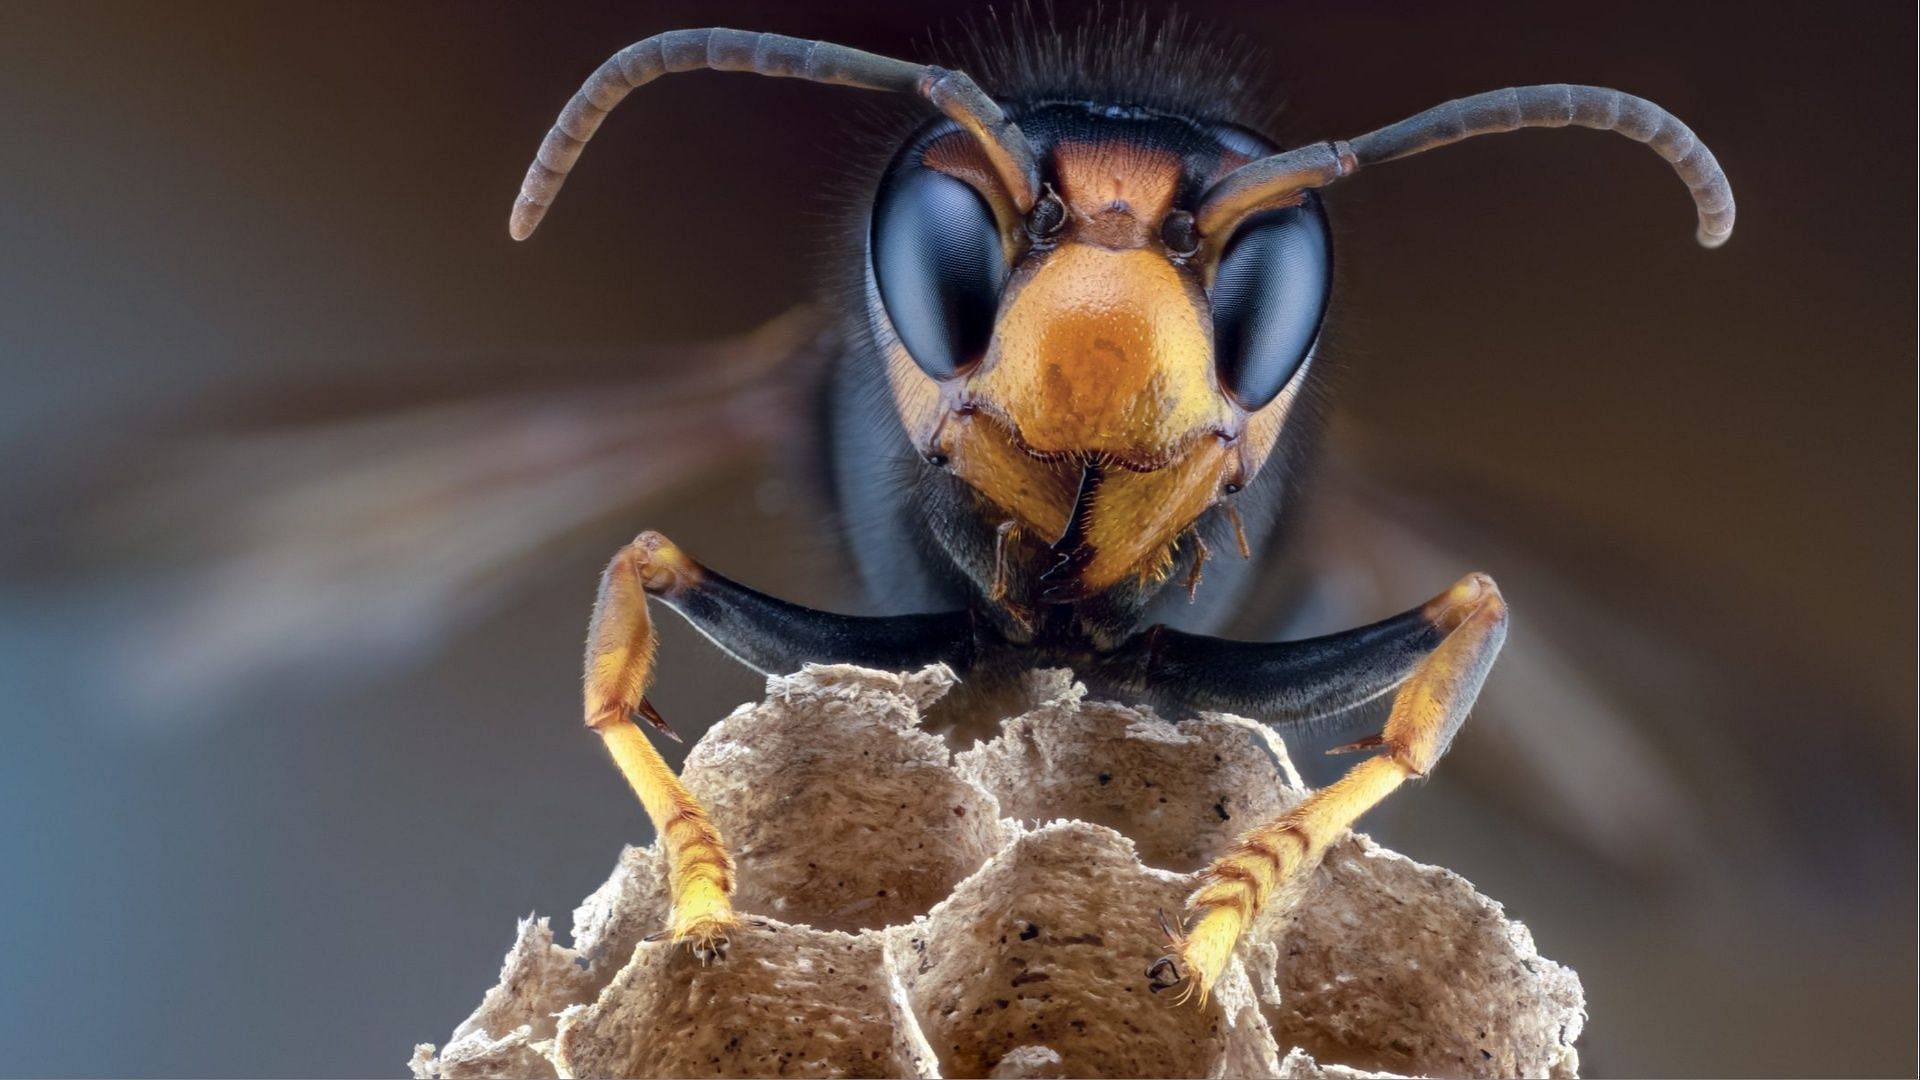 Yellow-legged hornet. (Photo via Getty Images)